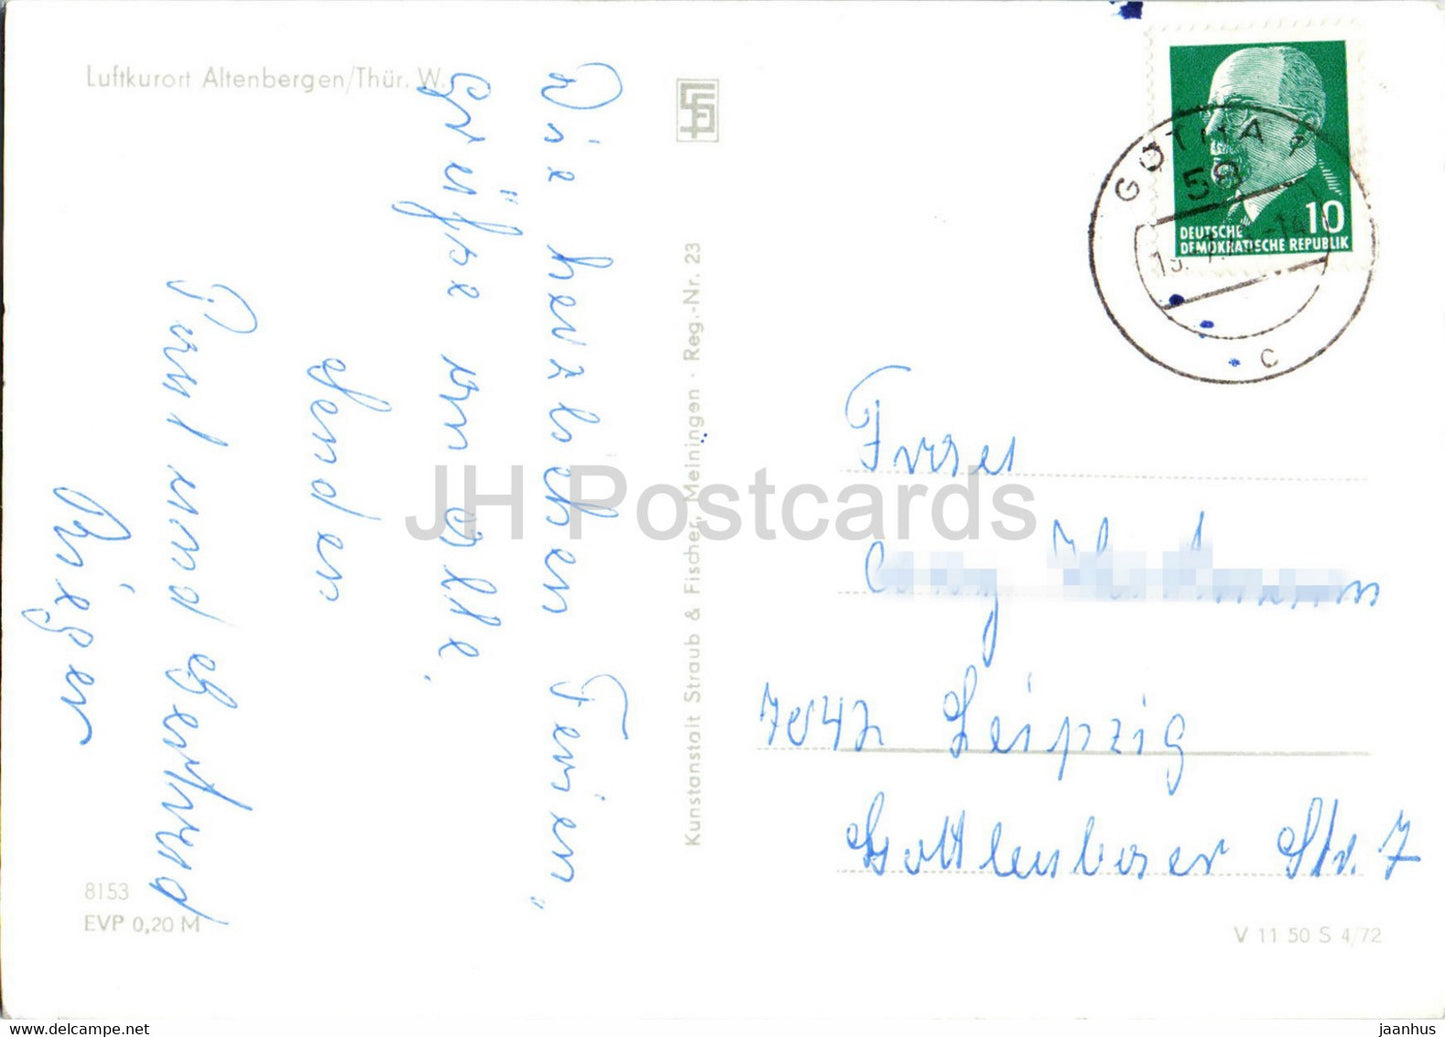 Luftkurort Altenbergen - carte postale ancienne - Allemagne DDR - utilisé